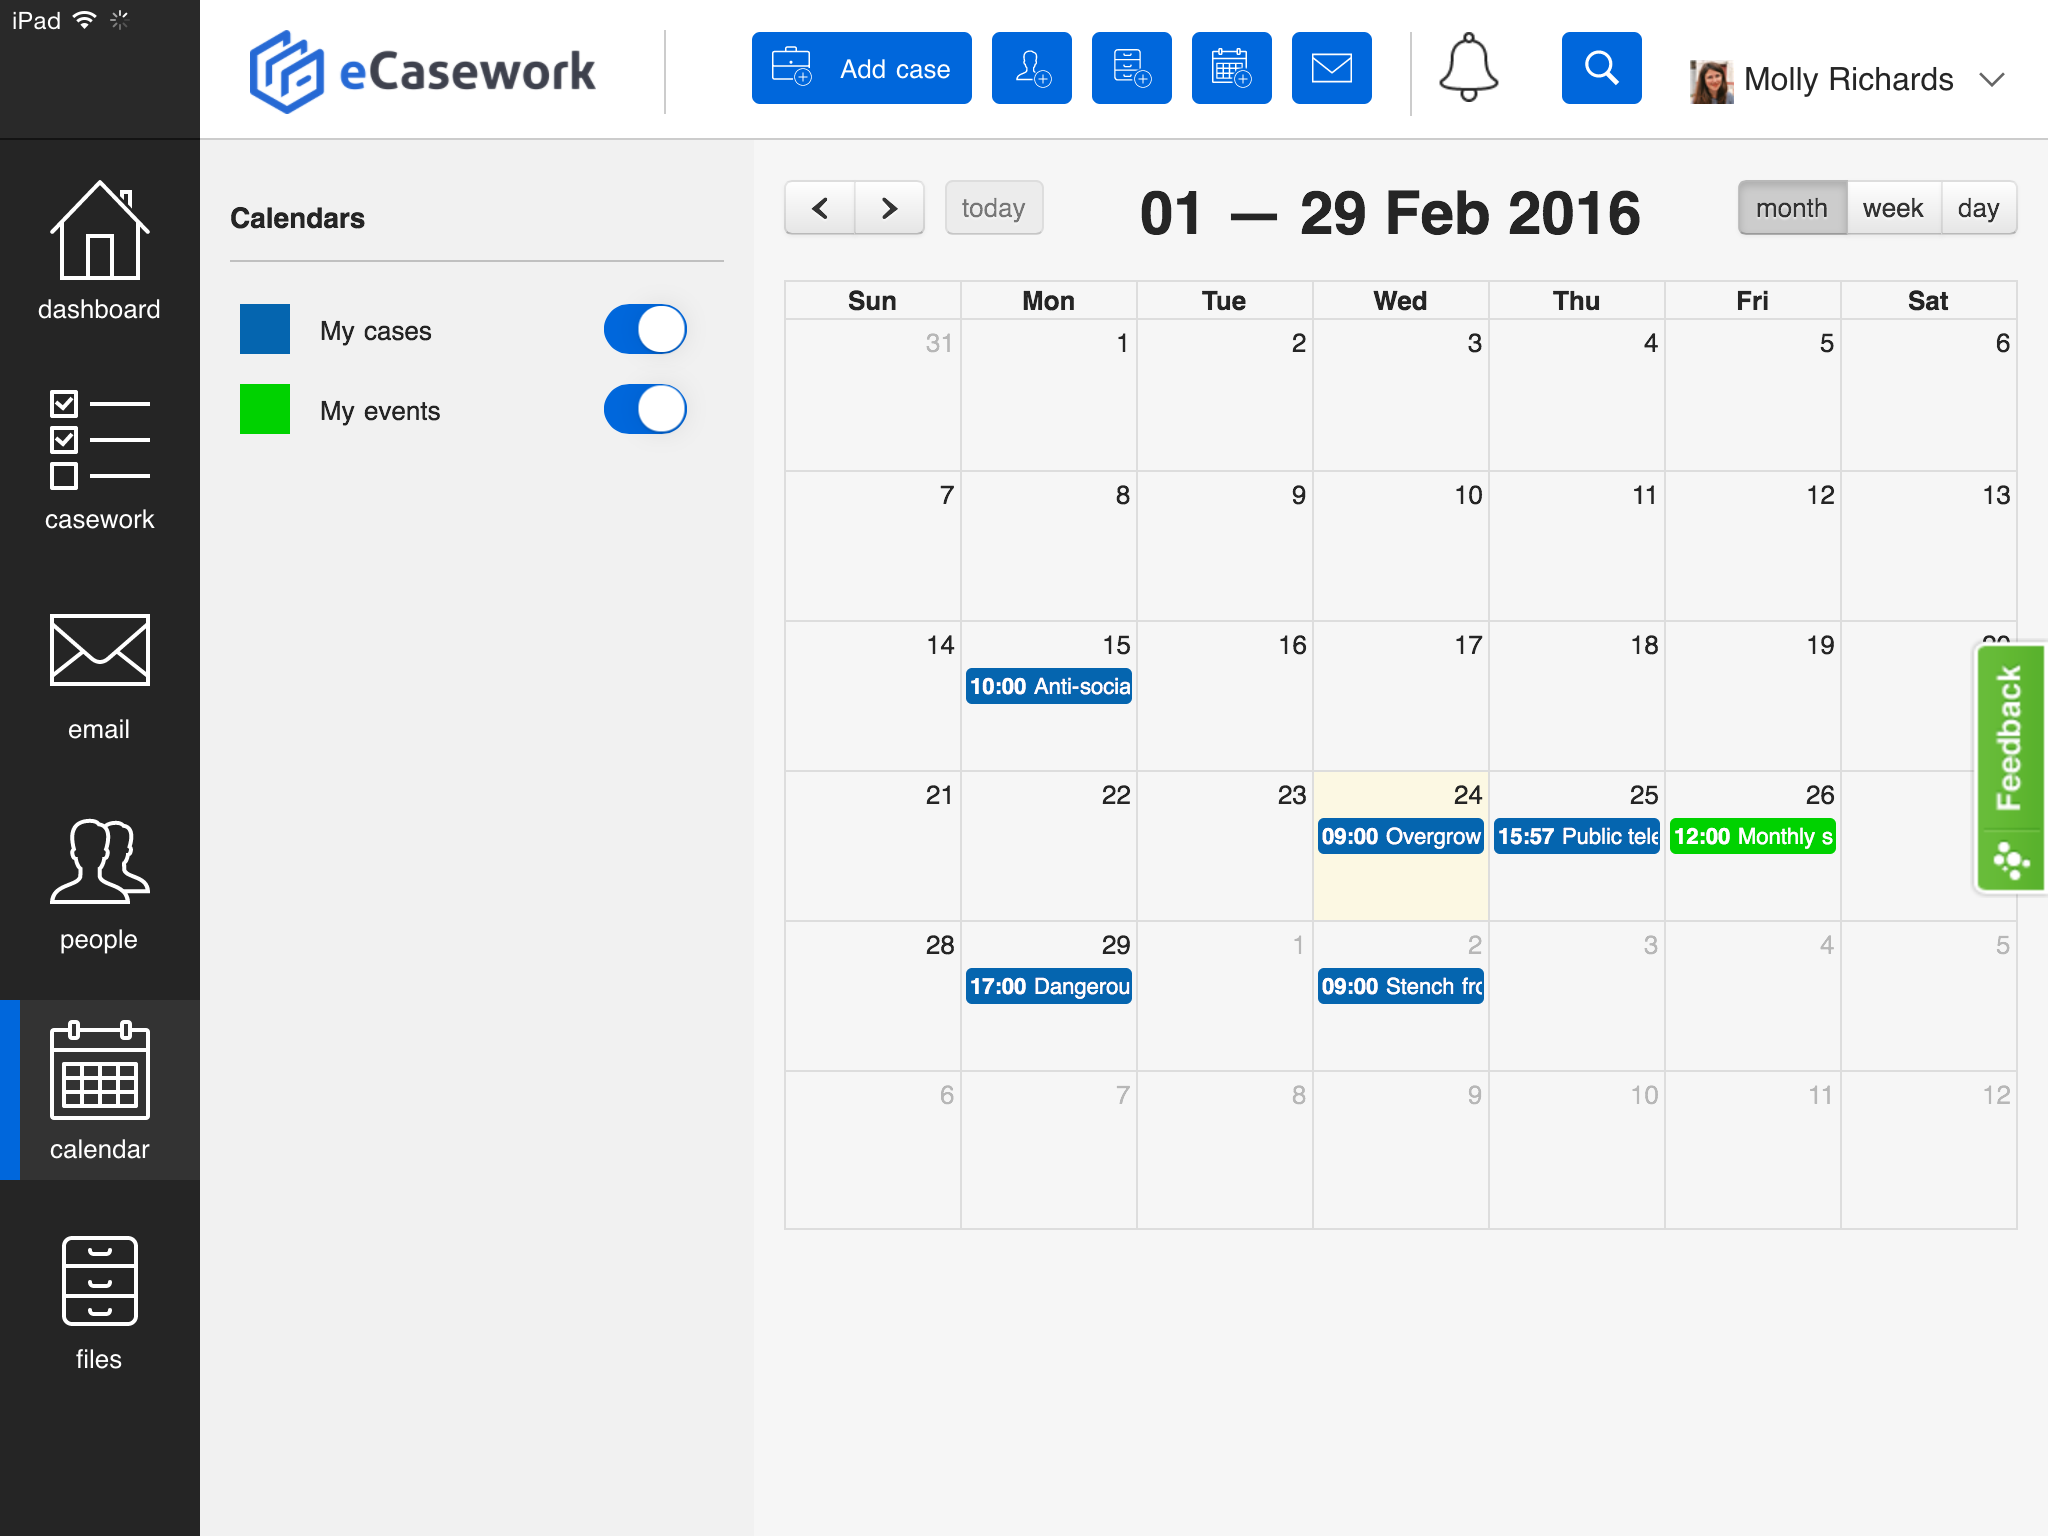 A screenshot of the eCasework calendar